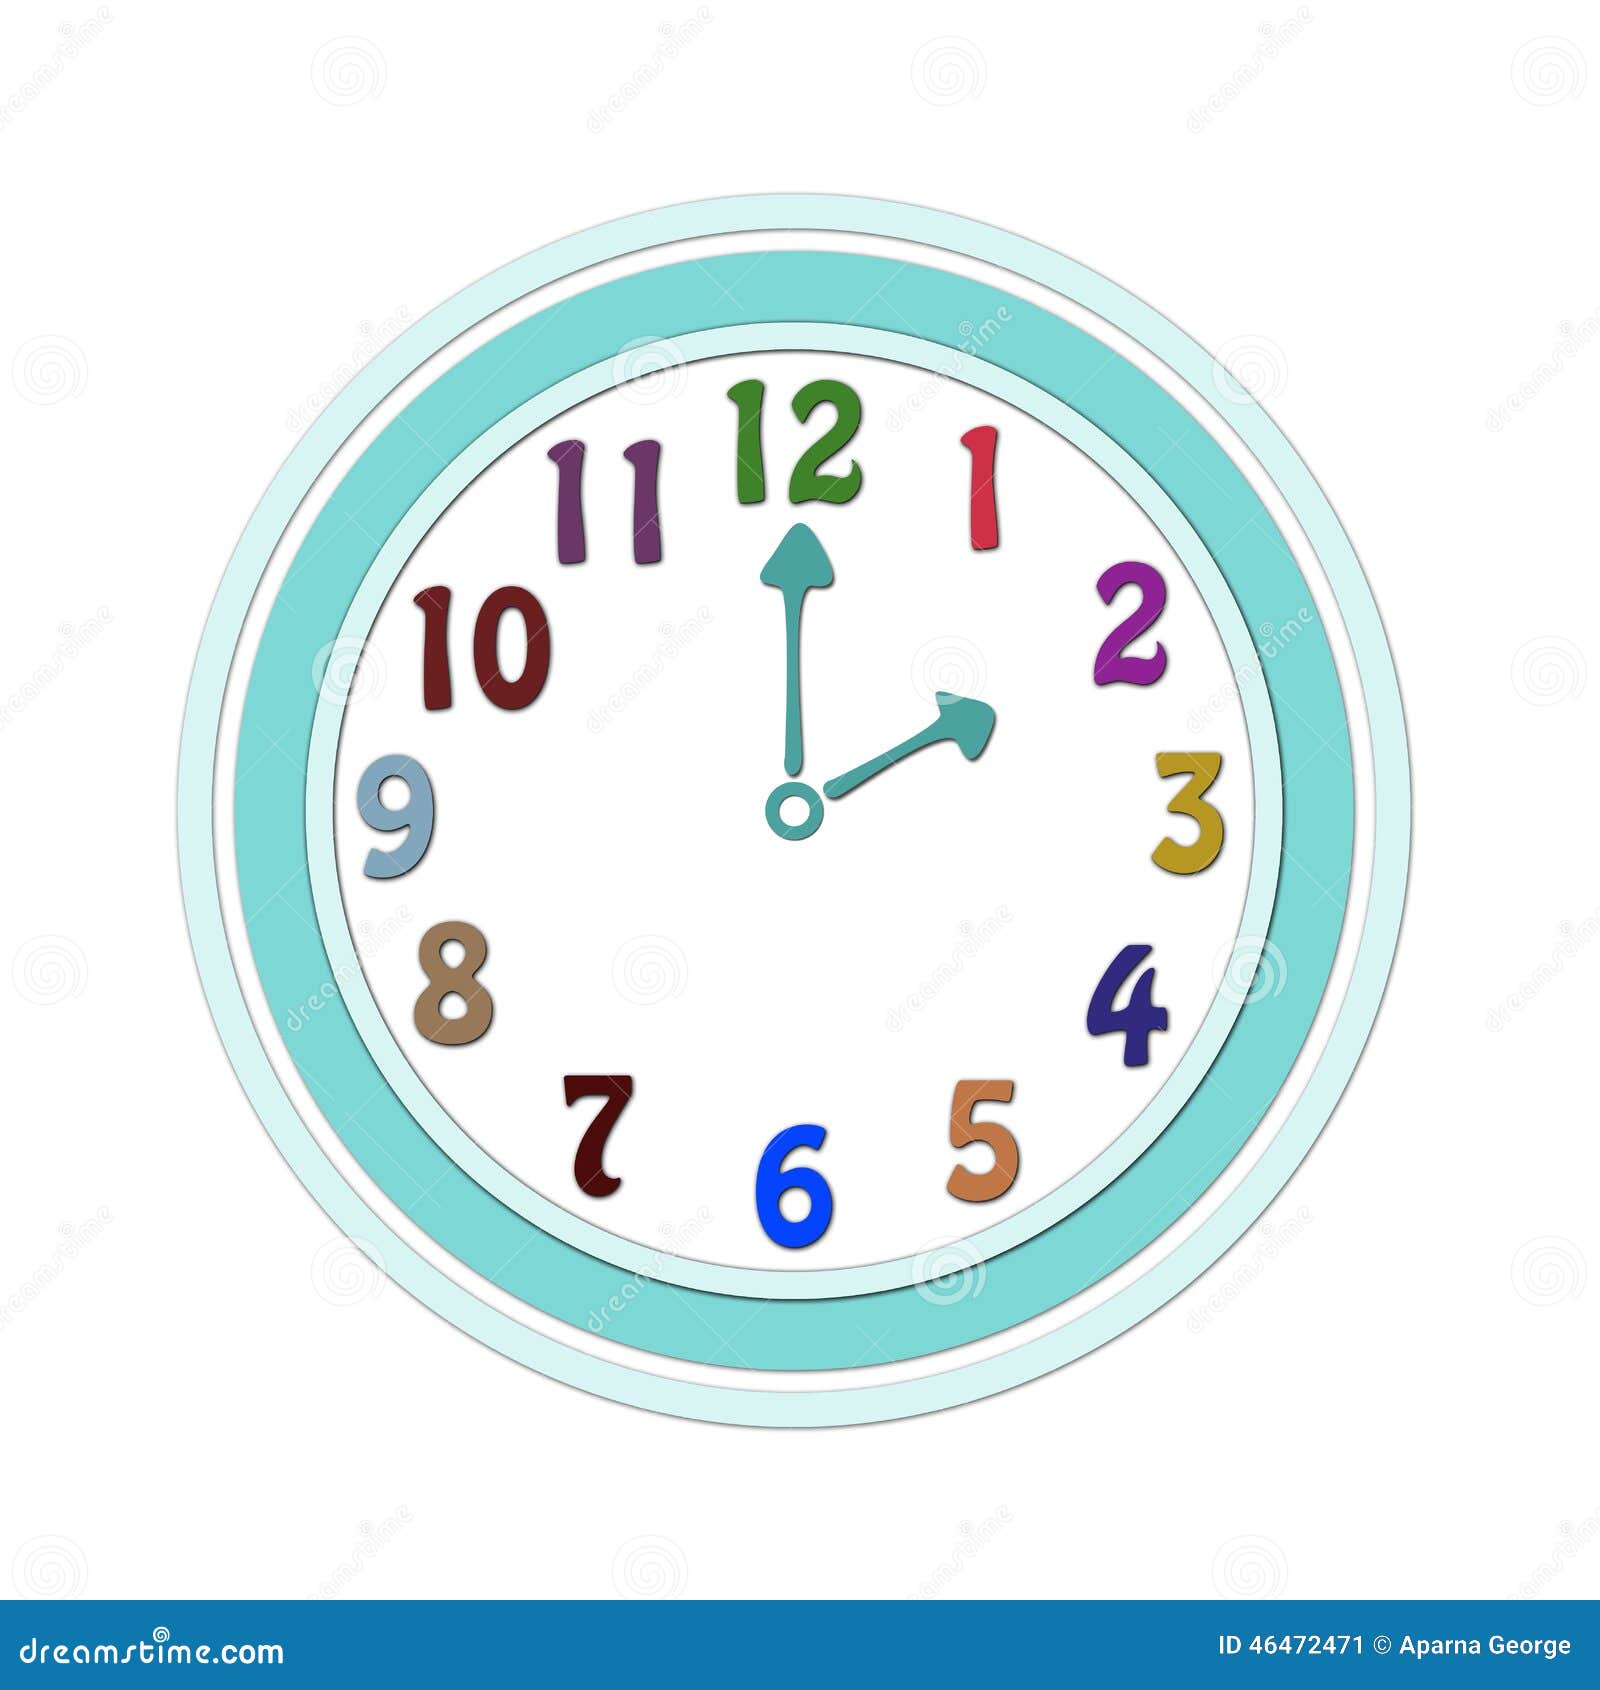 clock for kids